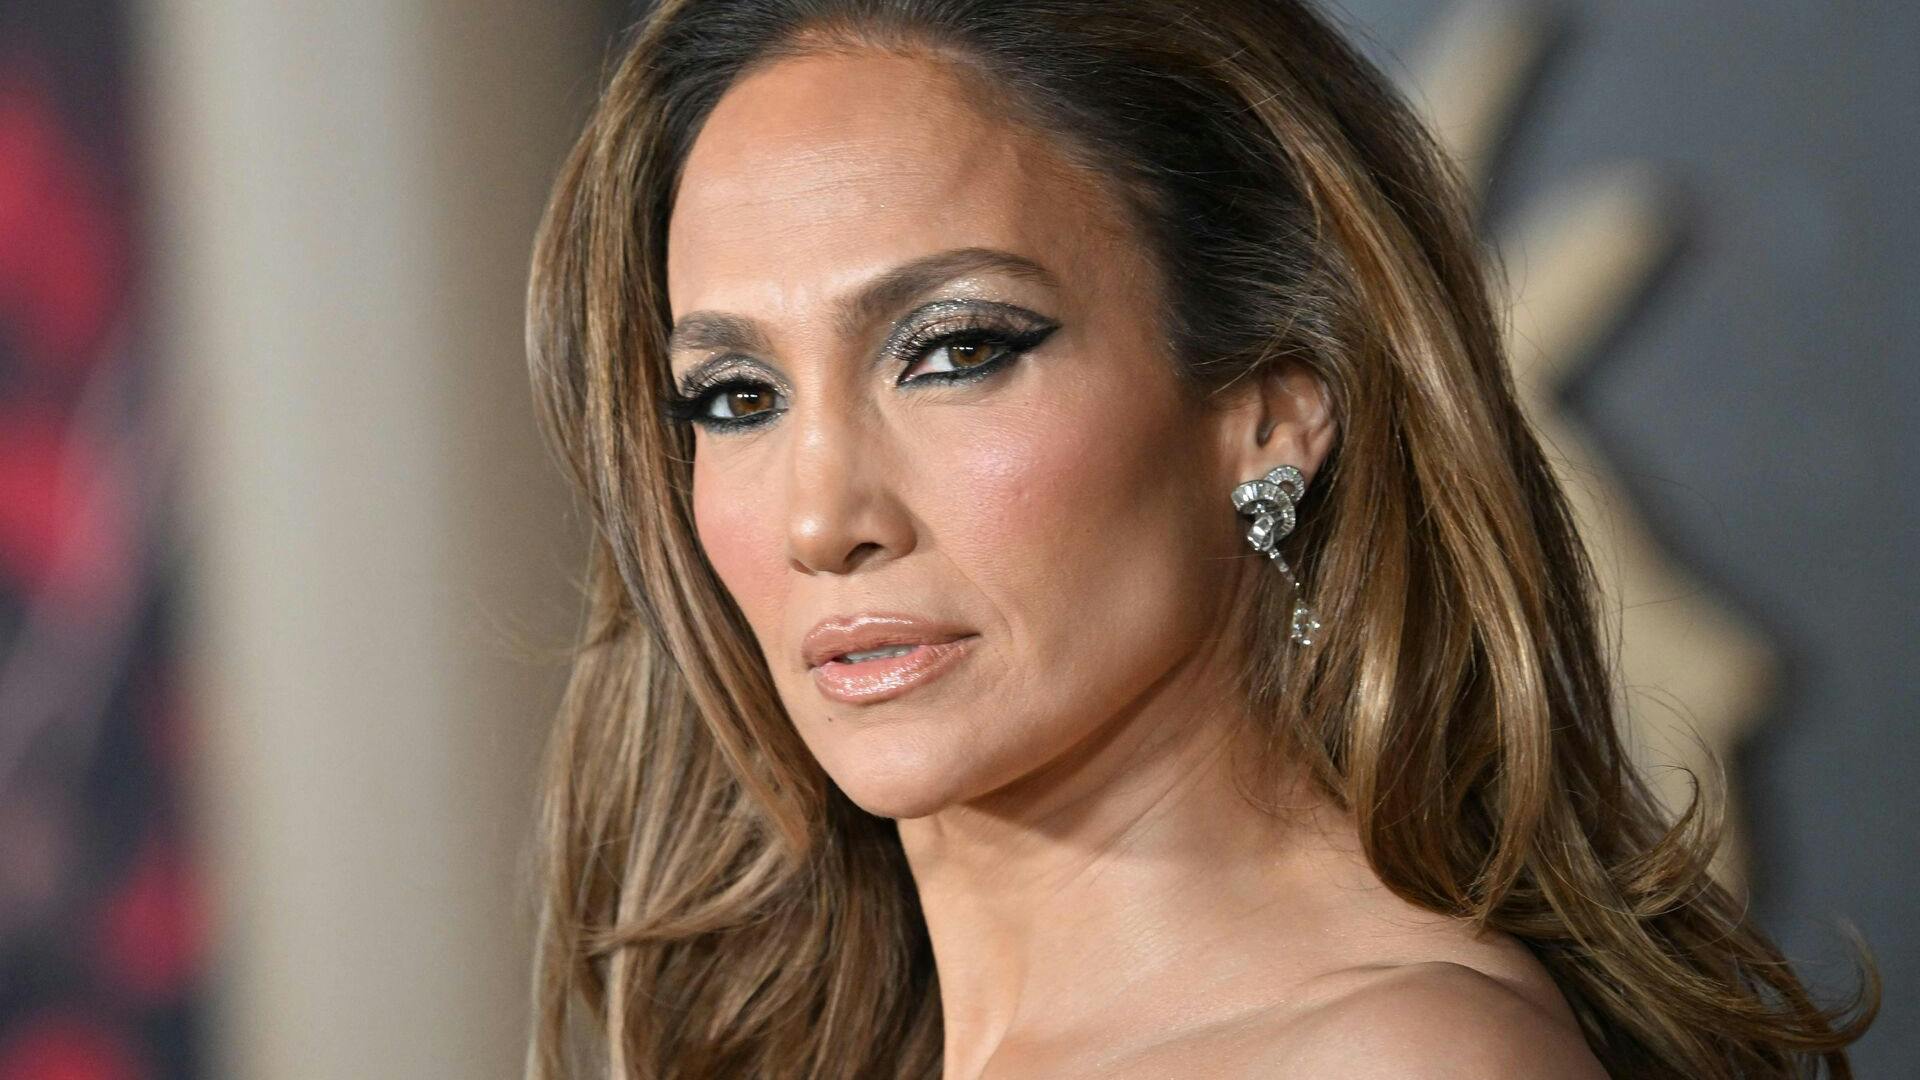 Jennifer Lopez har netop udgivet sin nyeste album "This Is Me... Now".